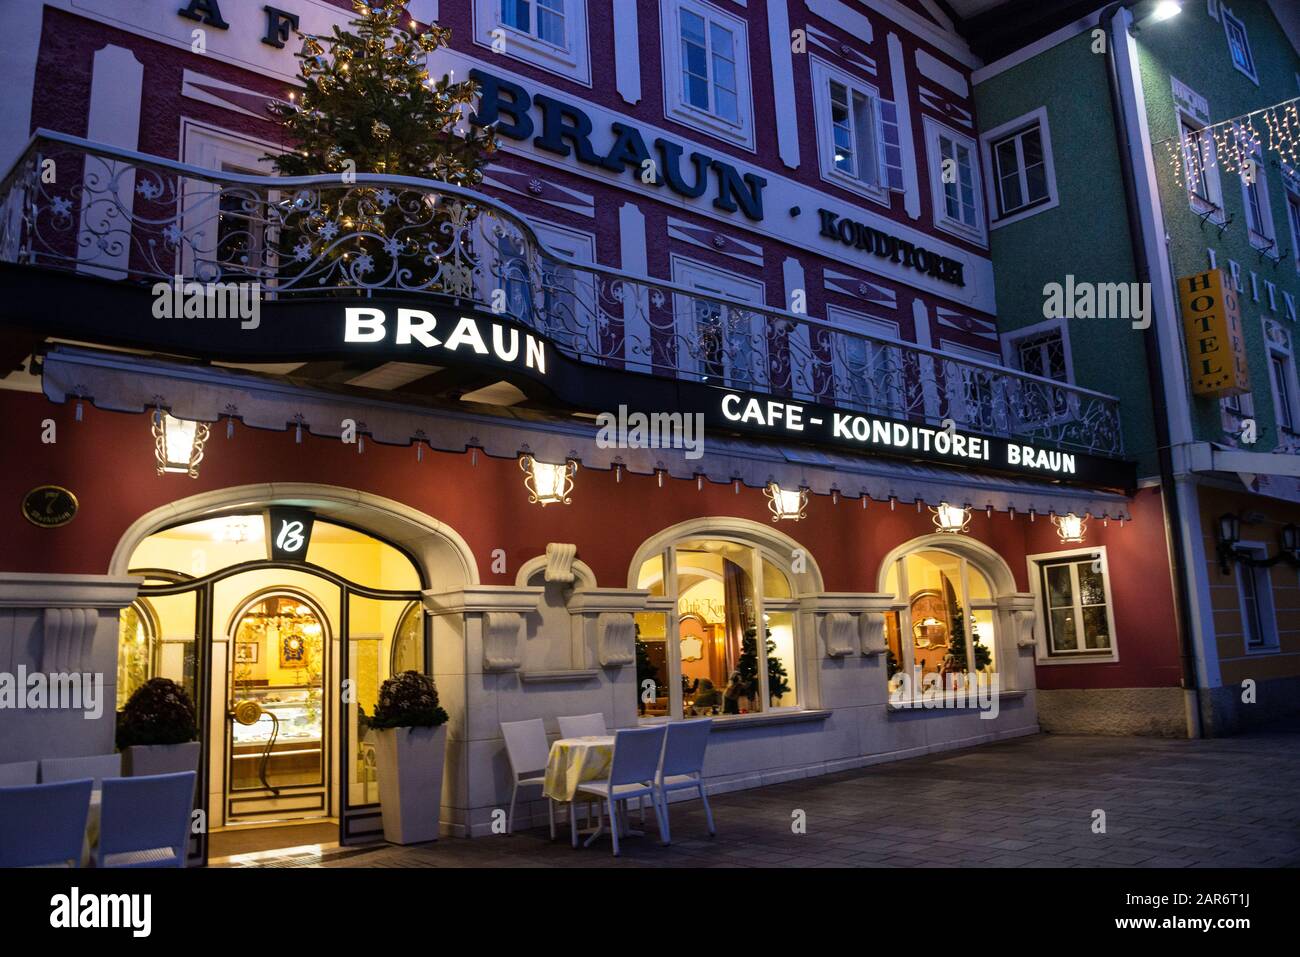 Cafe in Mondsee, Austria. Stock Photo